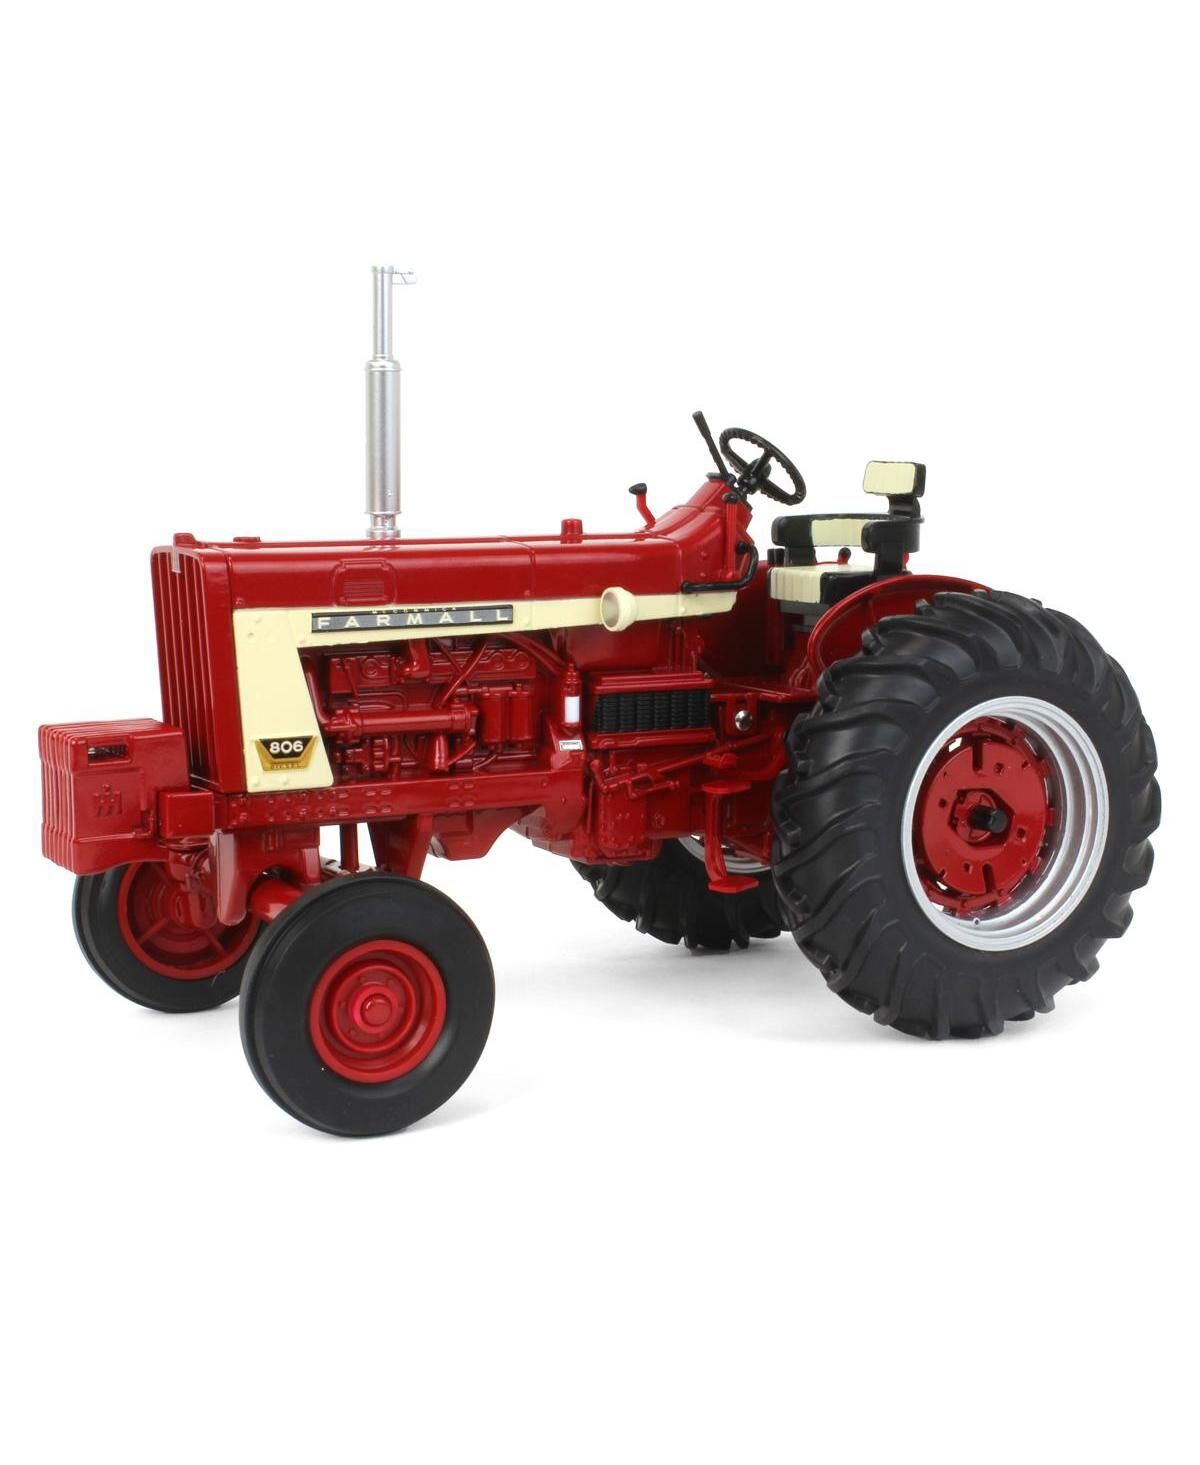 Ertl 1/16 International Harvester Farmall Tractor 100th Anniversary Edition - Red